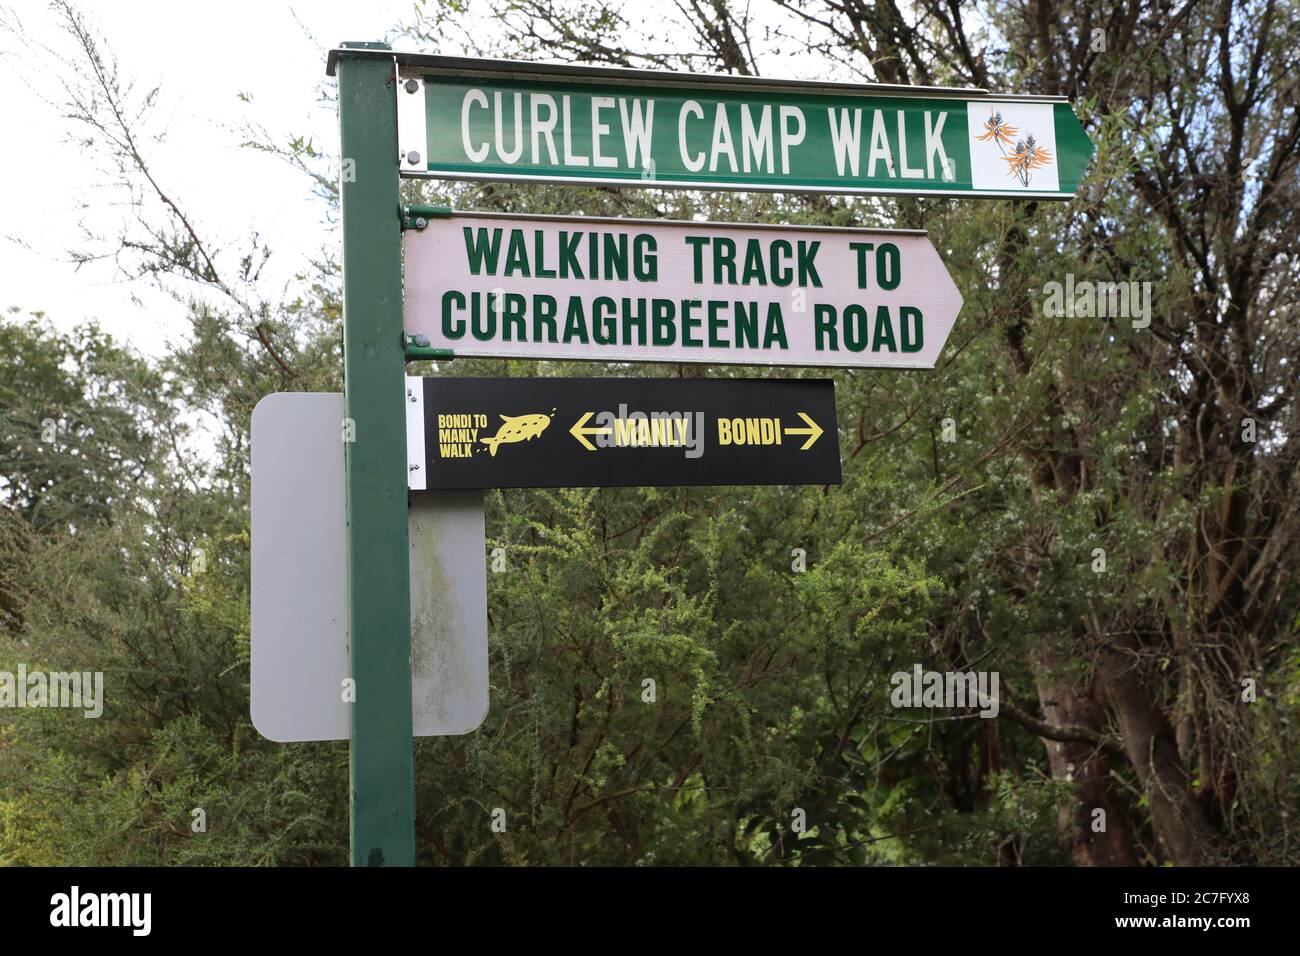 Curlew Camp Walk, walking track to Curraghbeena Road, Manly to Bondi Walk, Mosman, Sydney, NSW, Australia. Stock Photo